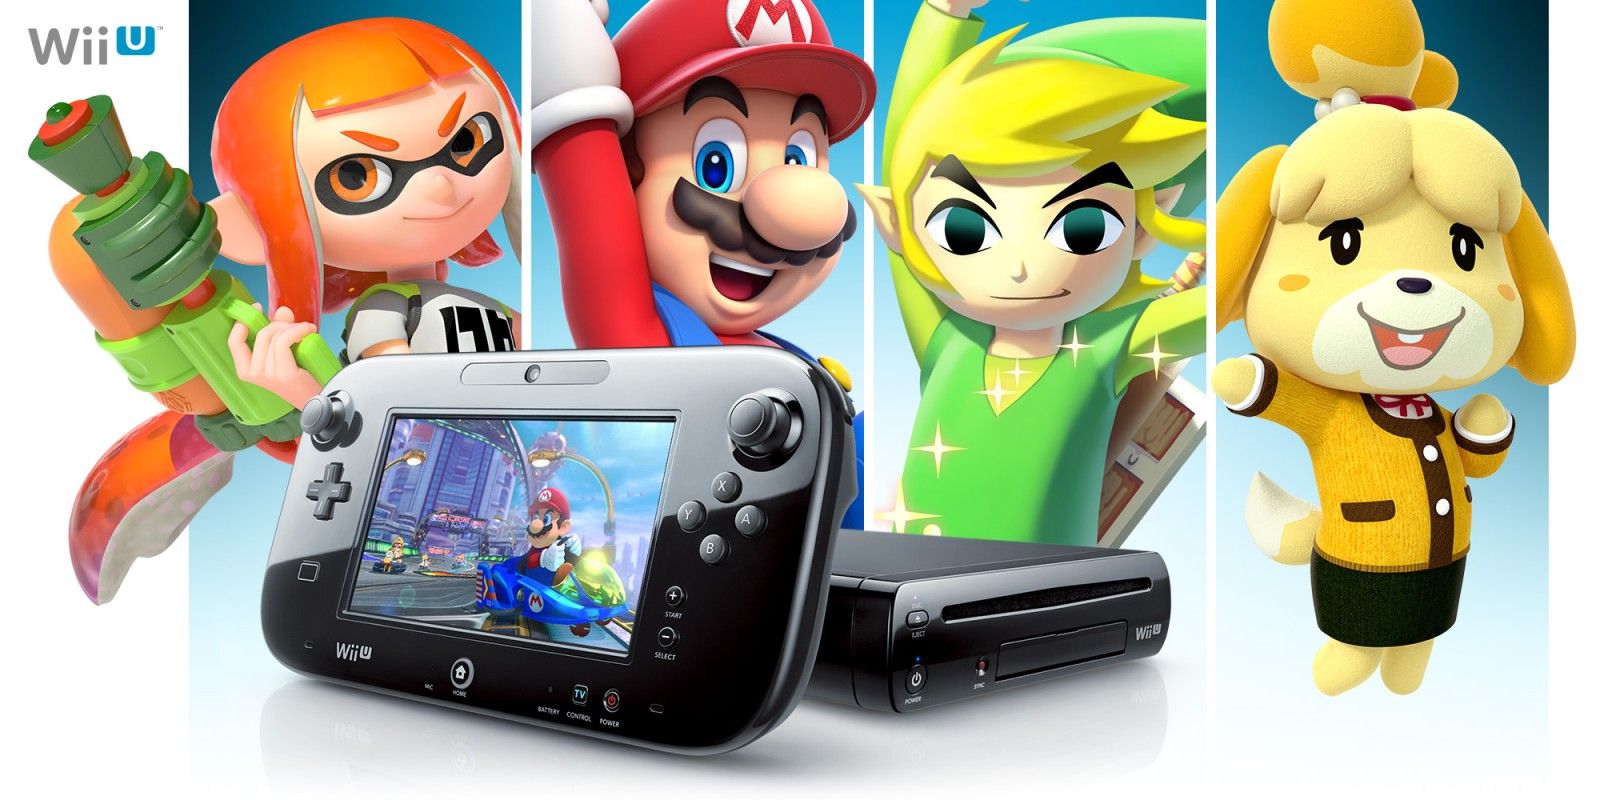 Wii U marketing image from Nintendo website.